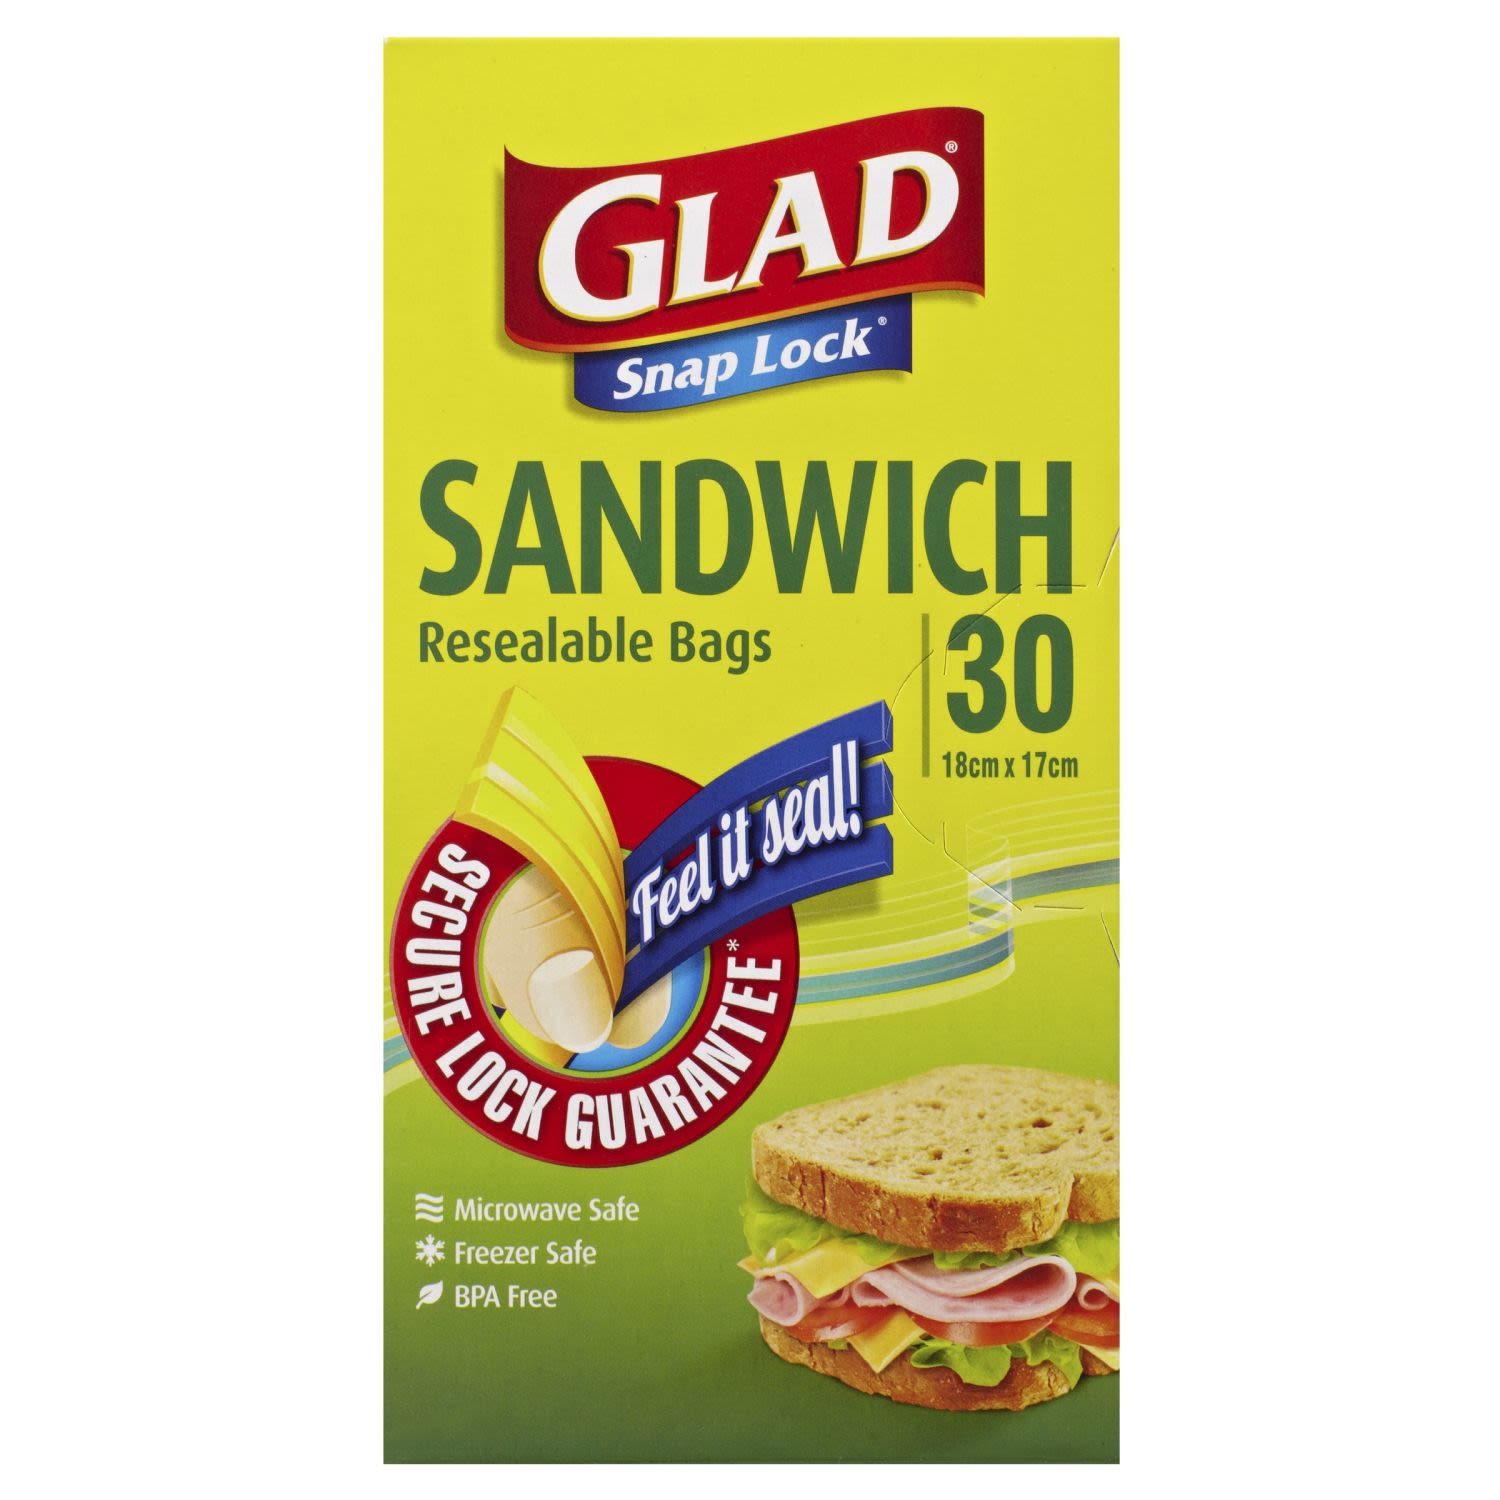 Glad Snaplock Sandwich Resealable Bags, 30 Each